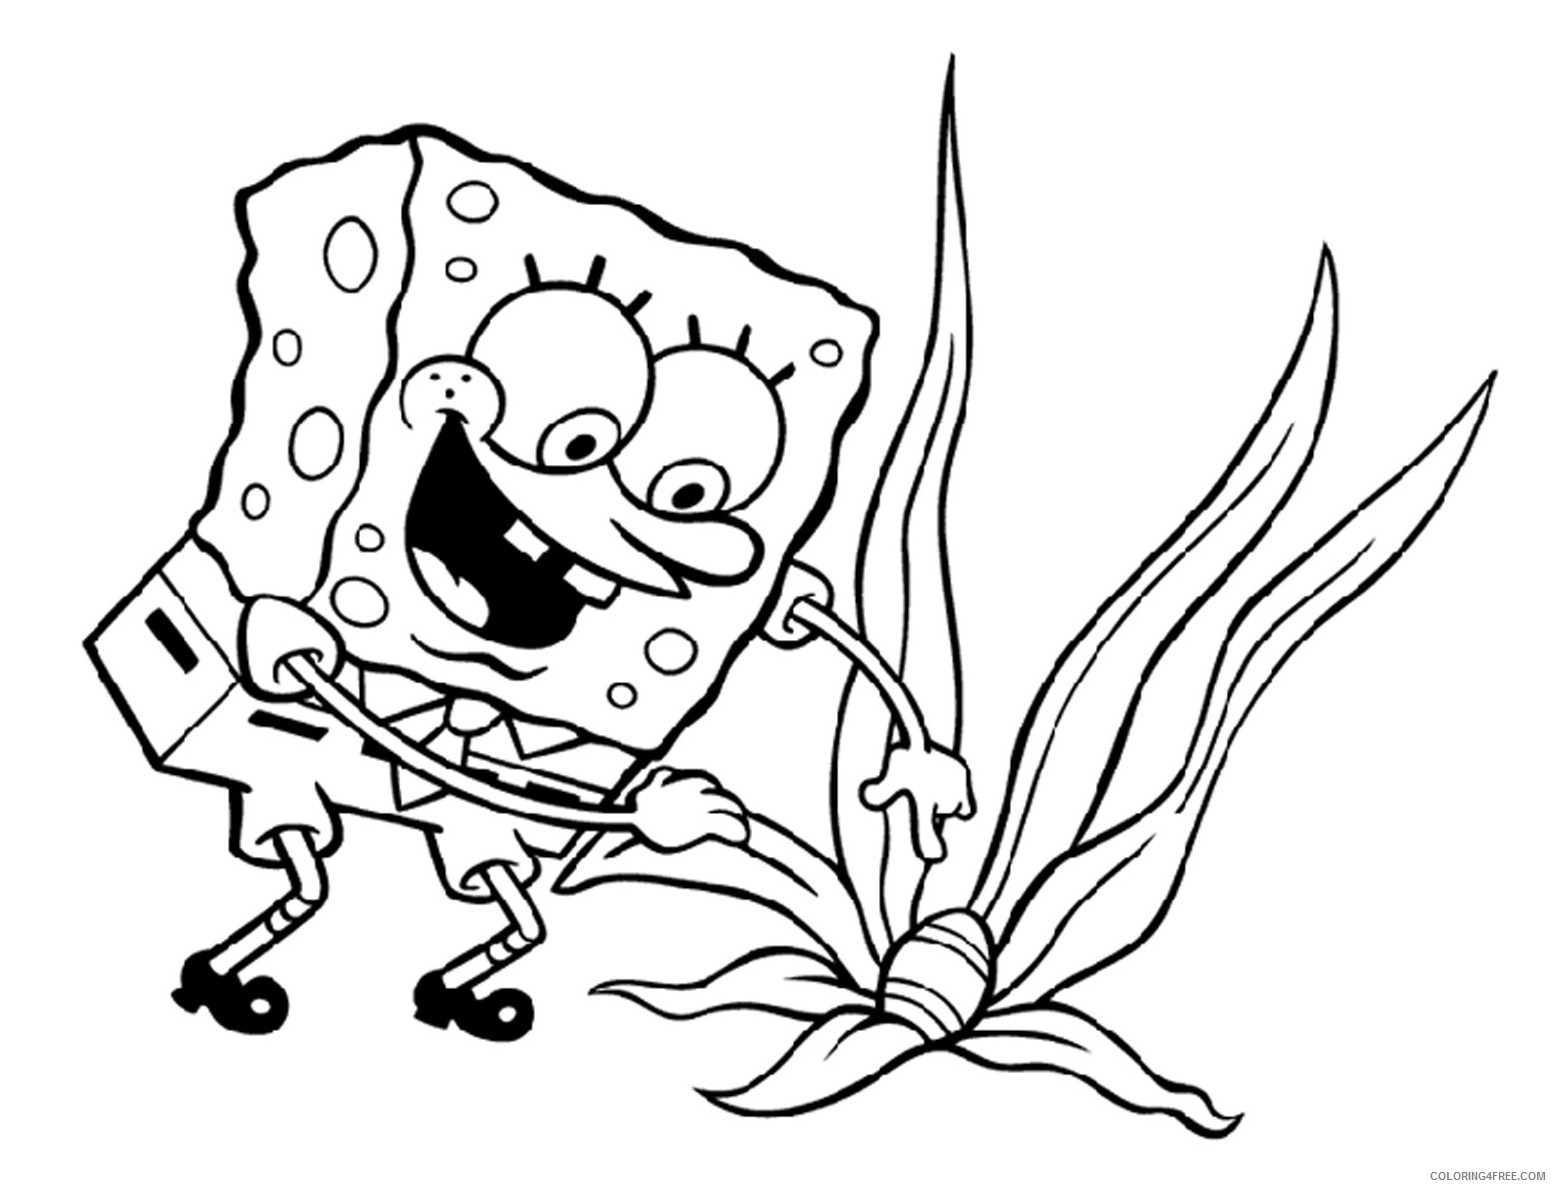 SpongeBob SquarePants Coloring Pages Cartoons Spongebob Squarepants To Print Printable 2020 6064 Coloring4free